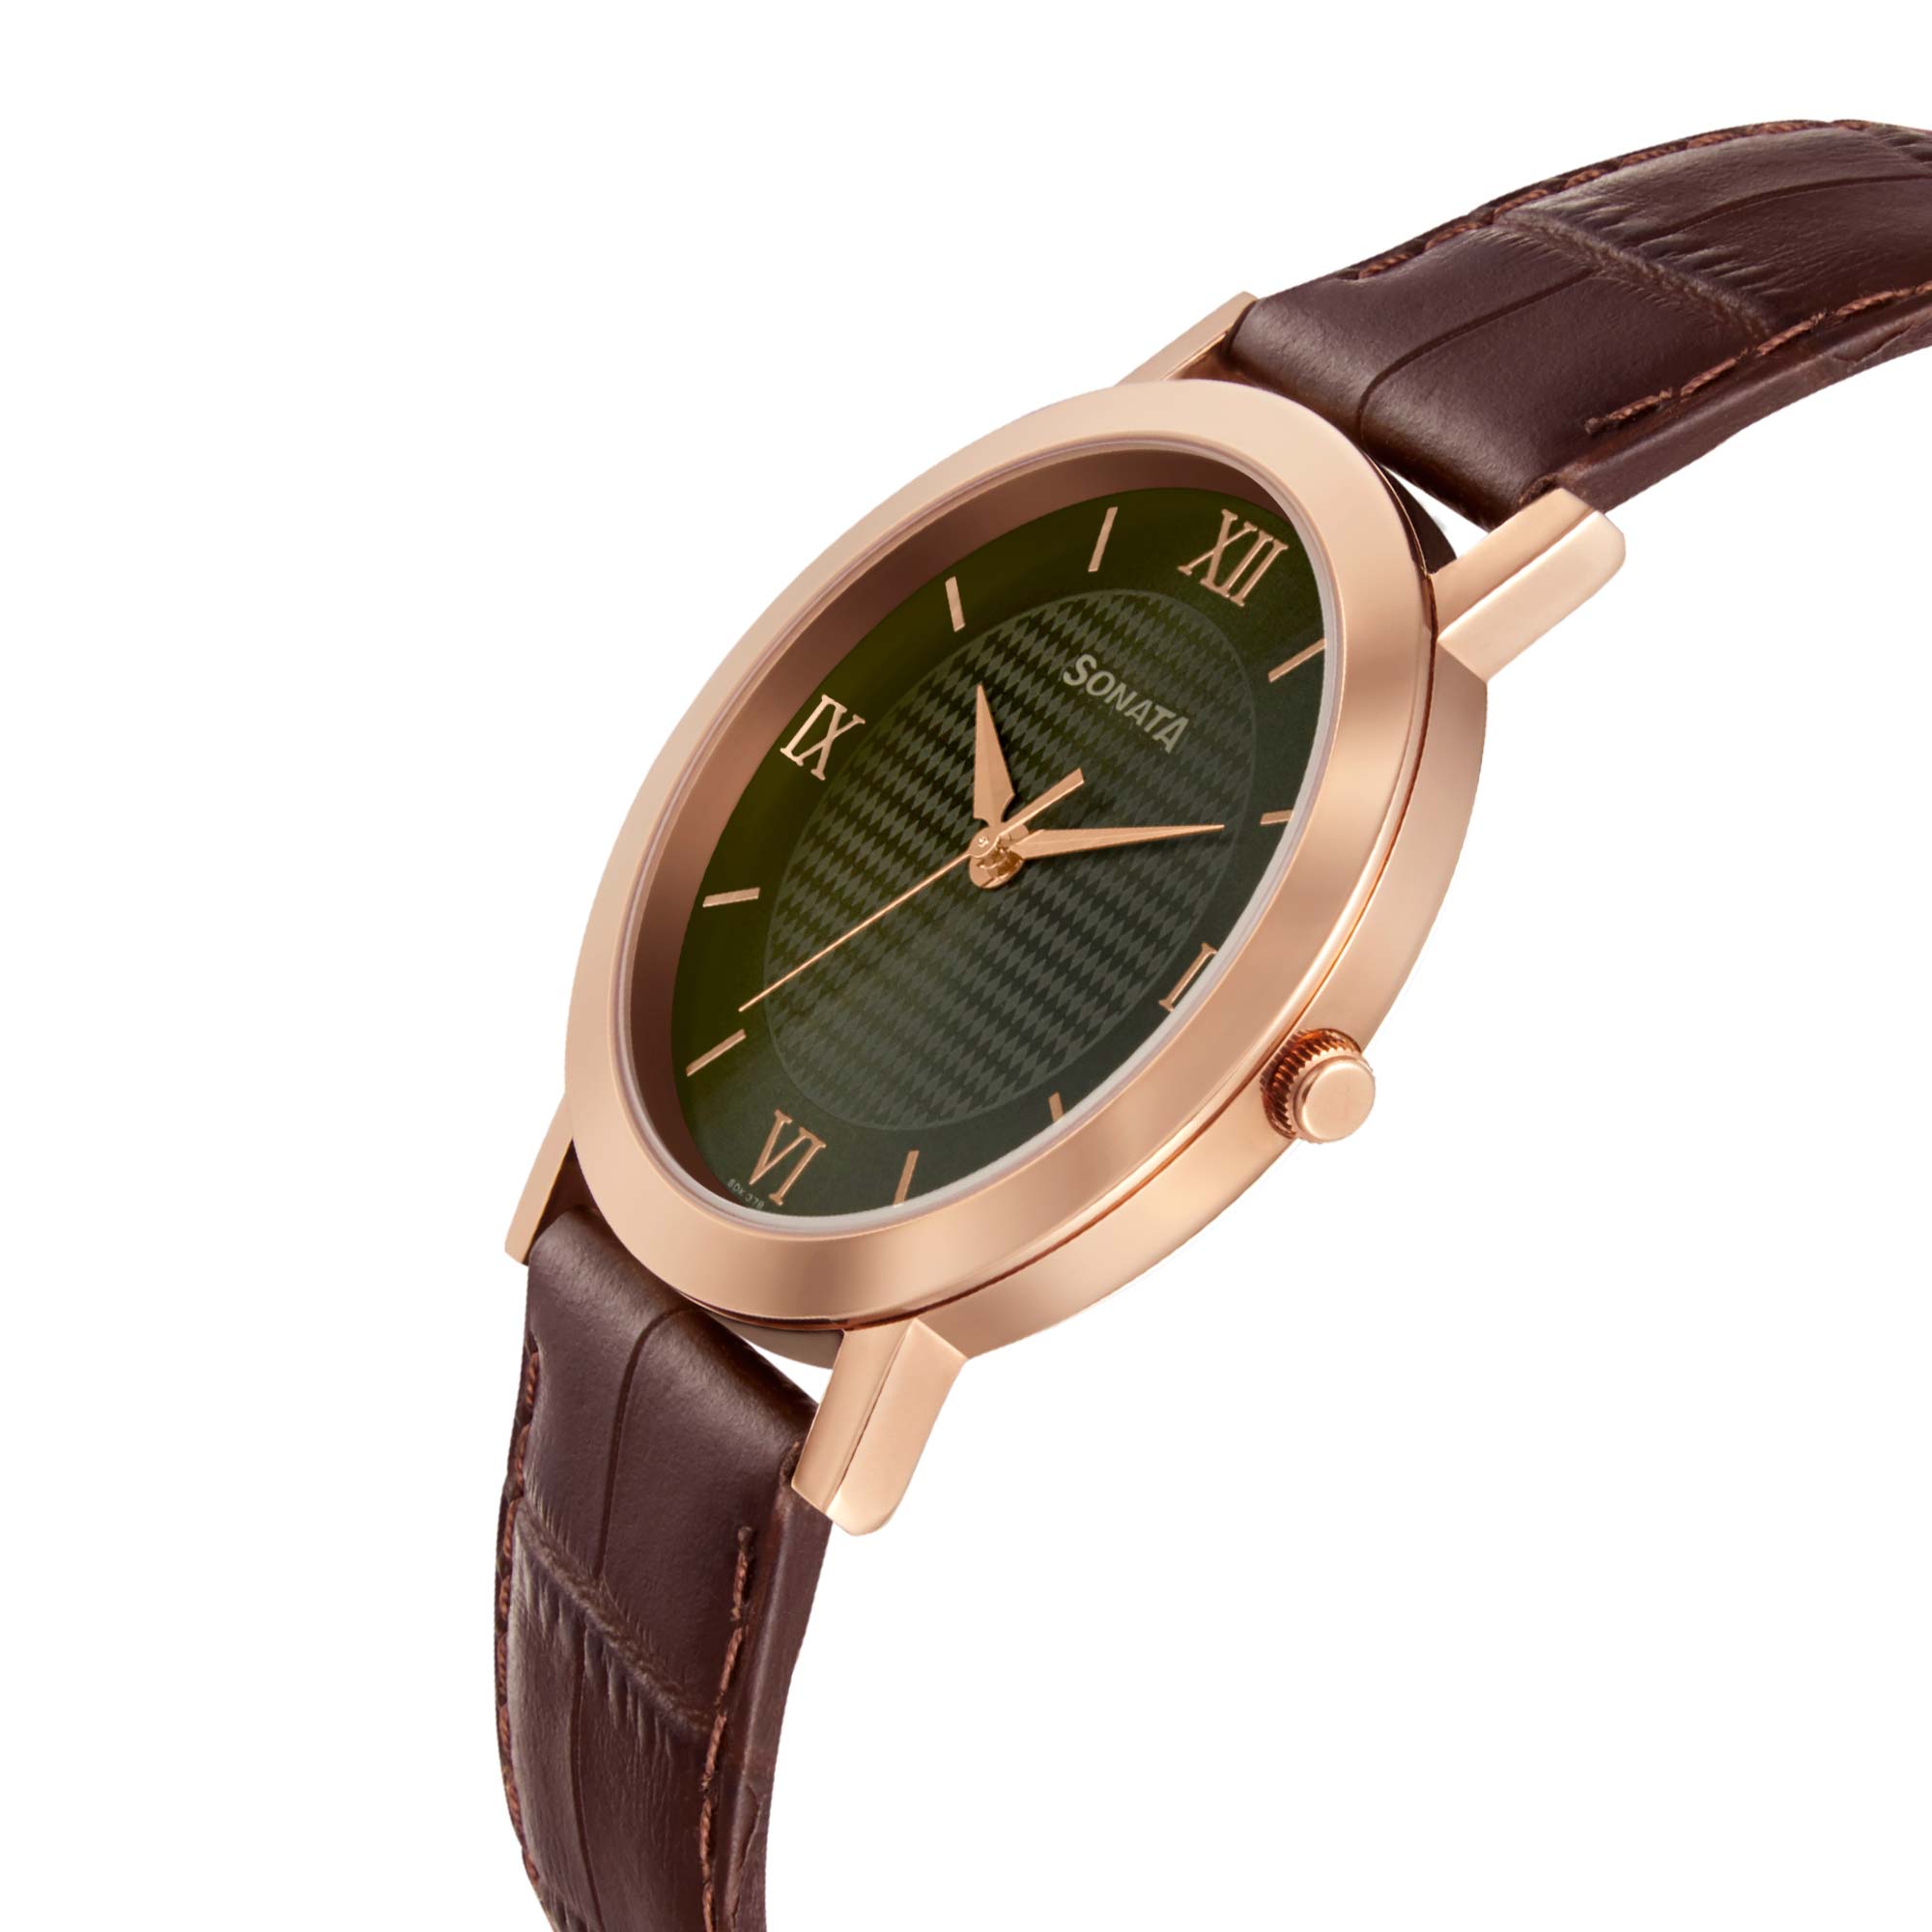 Sonata Quartz Analog Green Dial Leather Strap Watch for Men